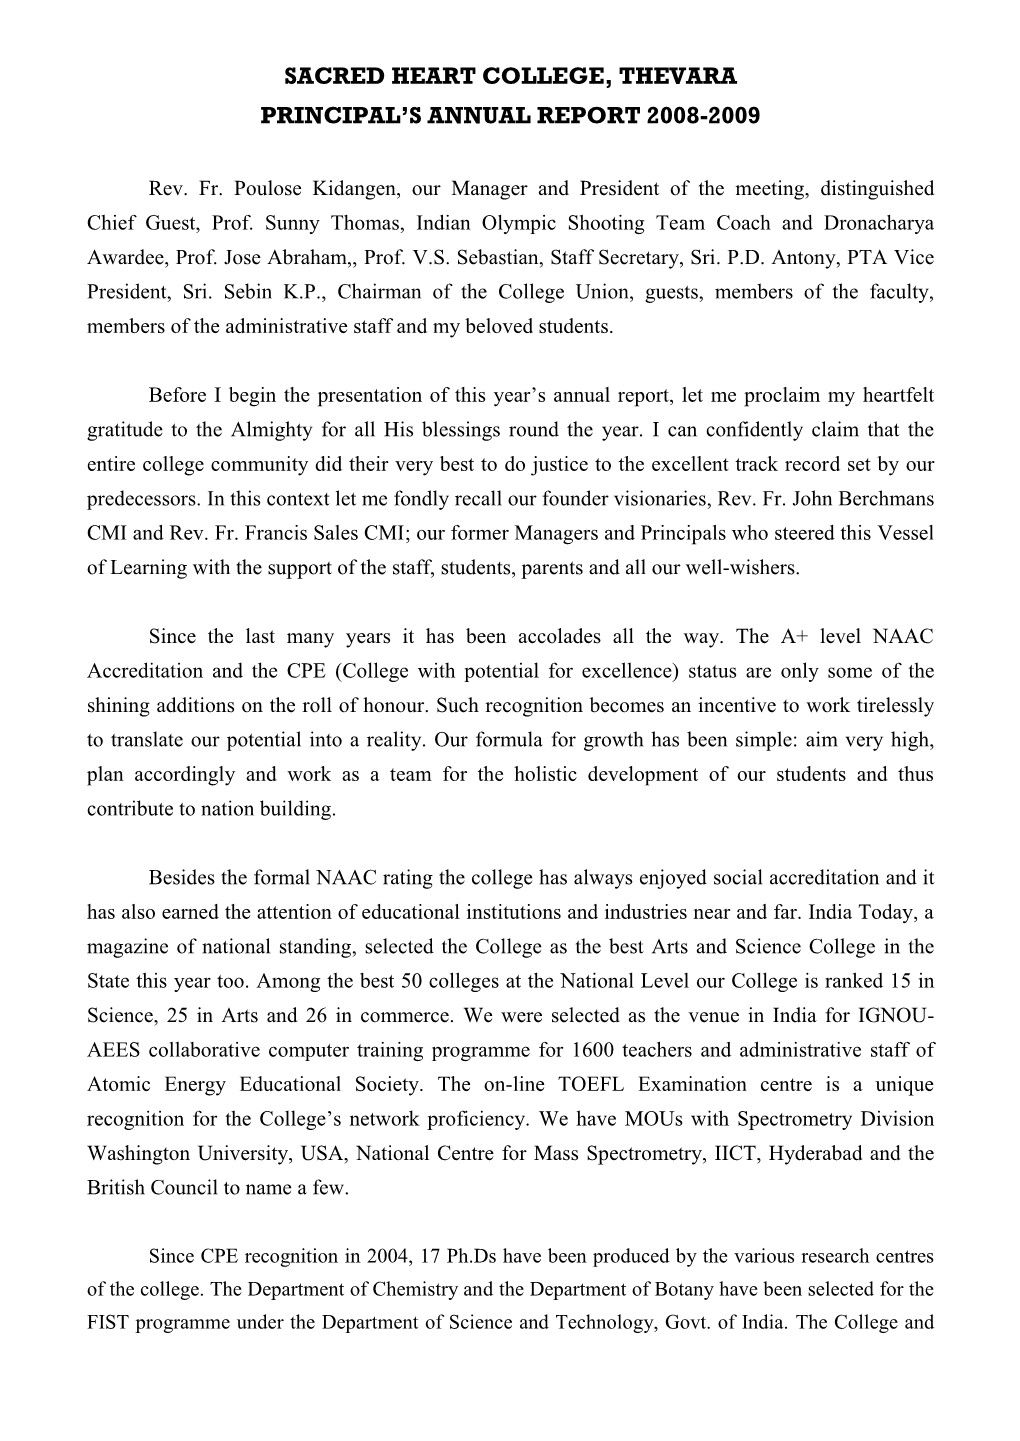 Sacred Heart College, Thevara Principal's Annual Report 2008-2009